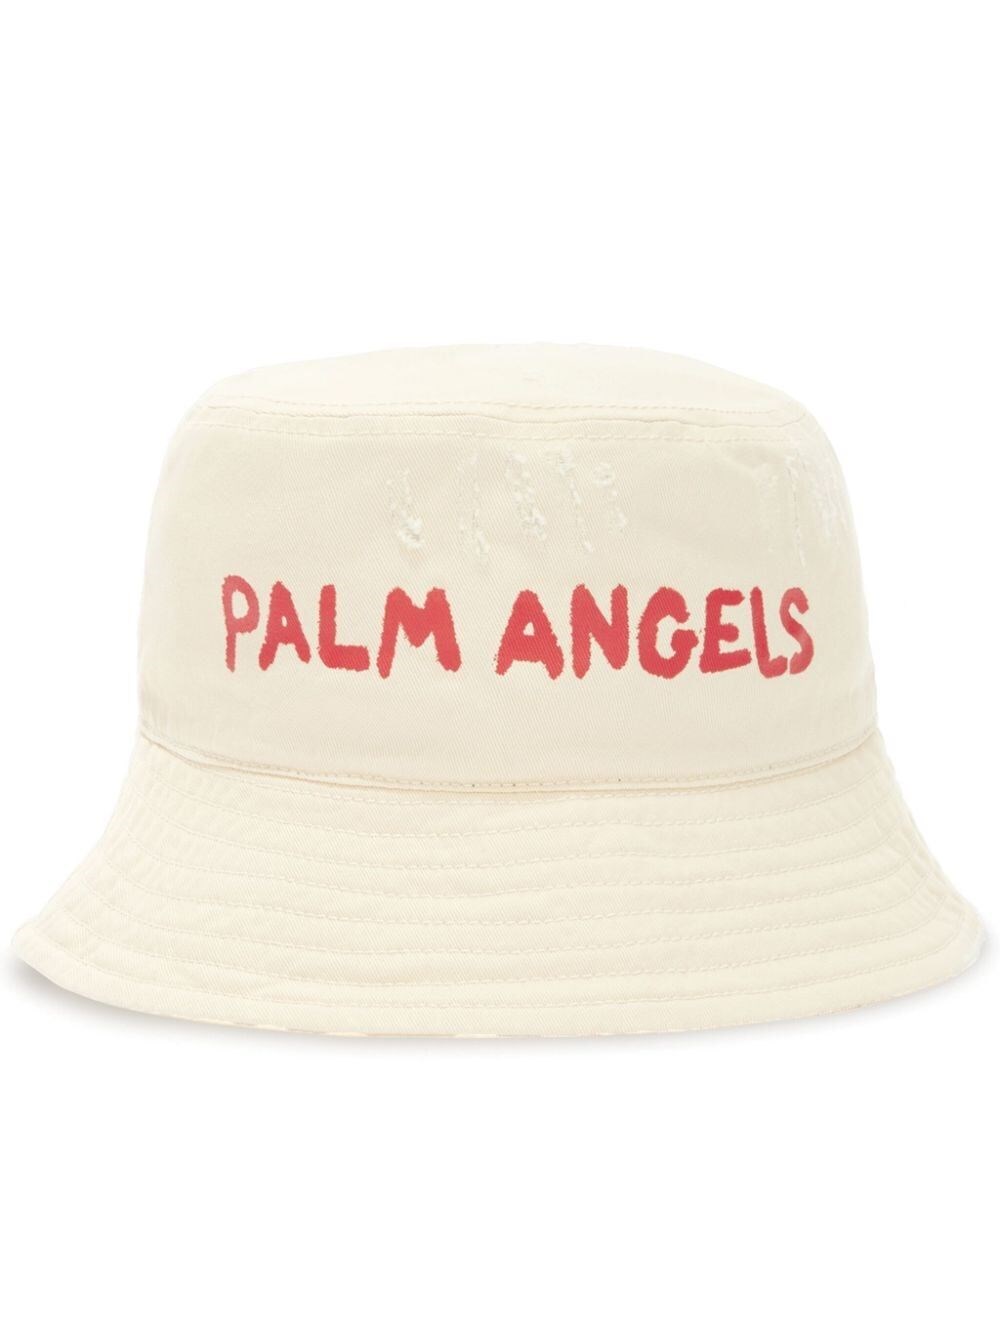 PALM ANGELS LOGO BUCKET HAT